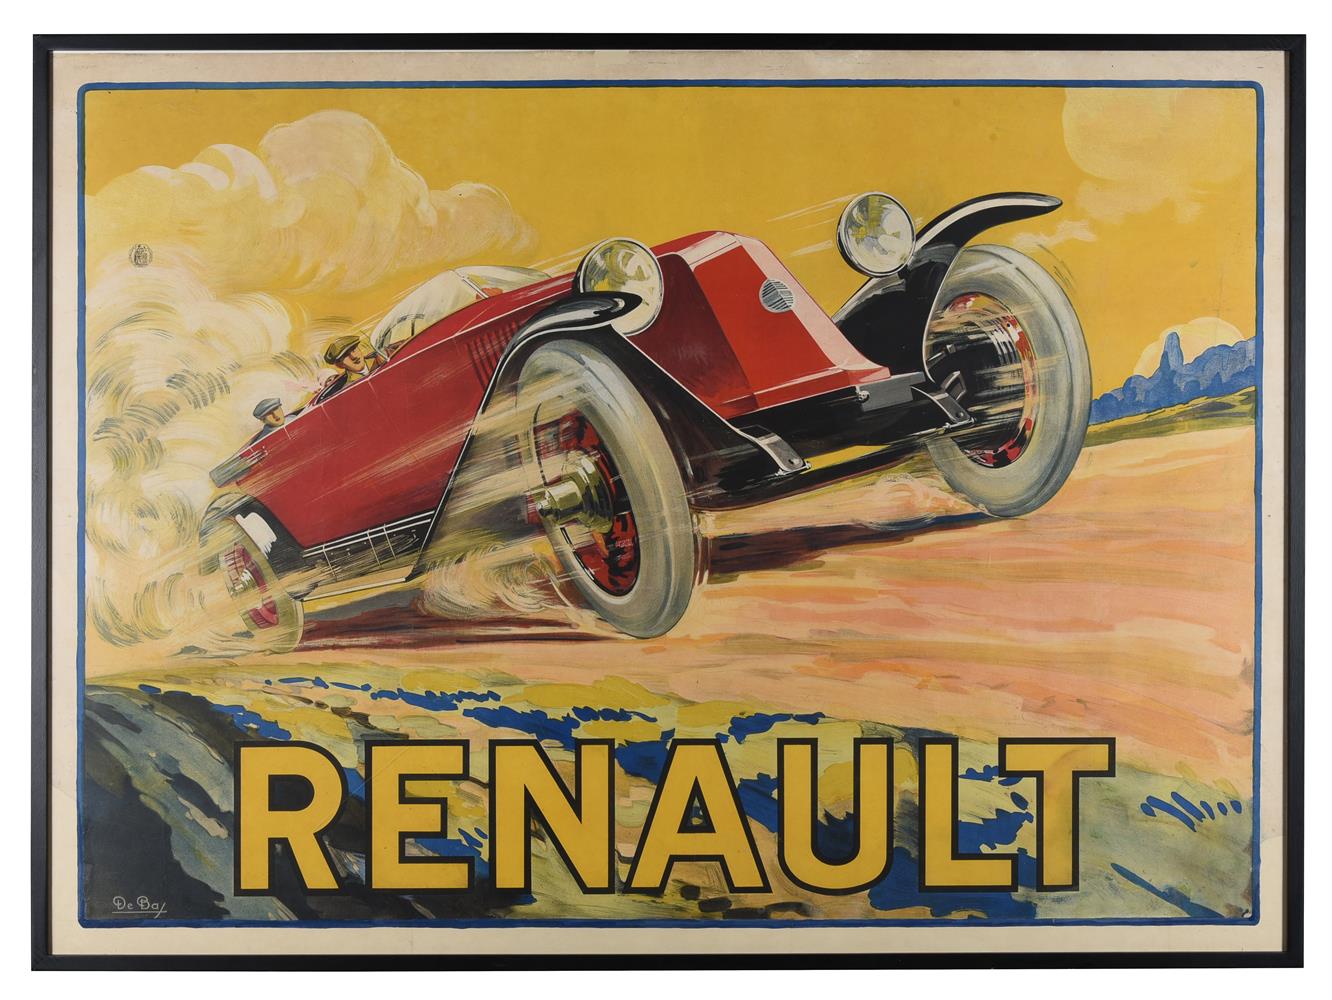 Rene de Bas (dates unknown), Renault